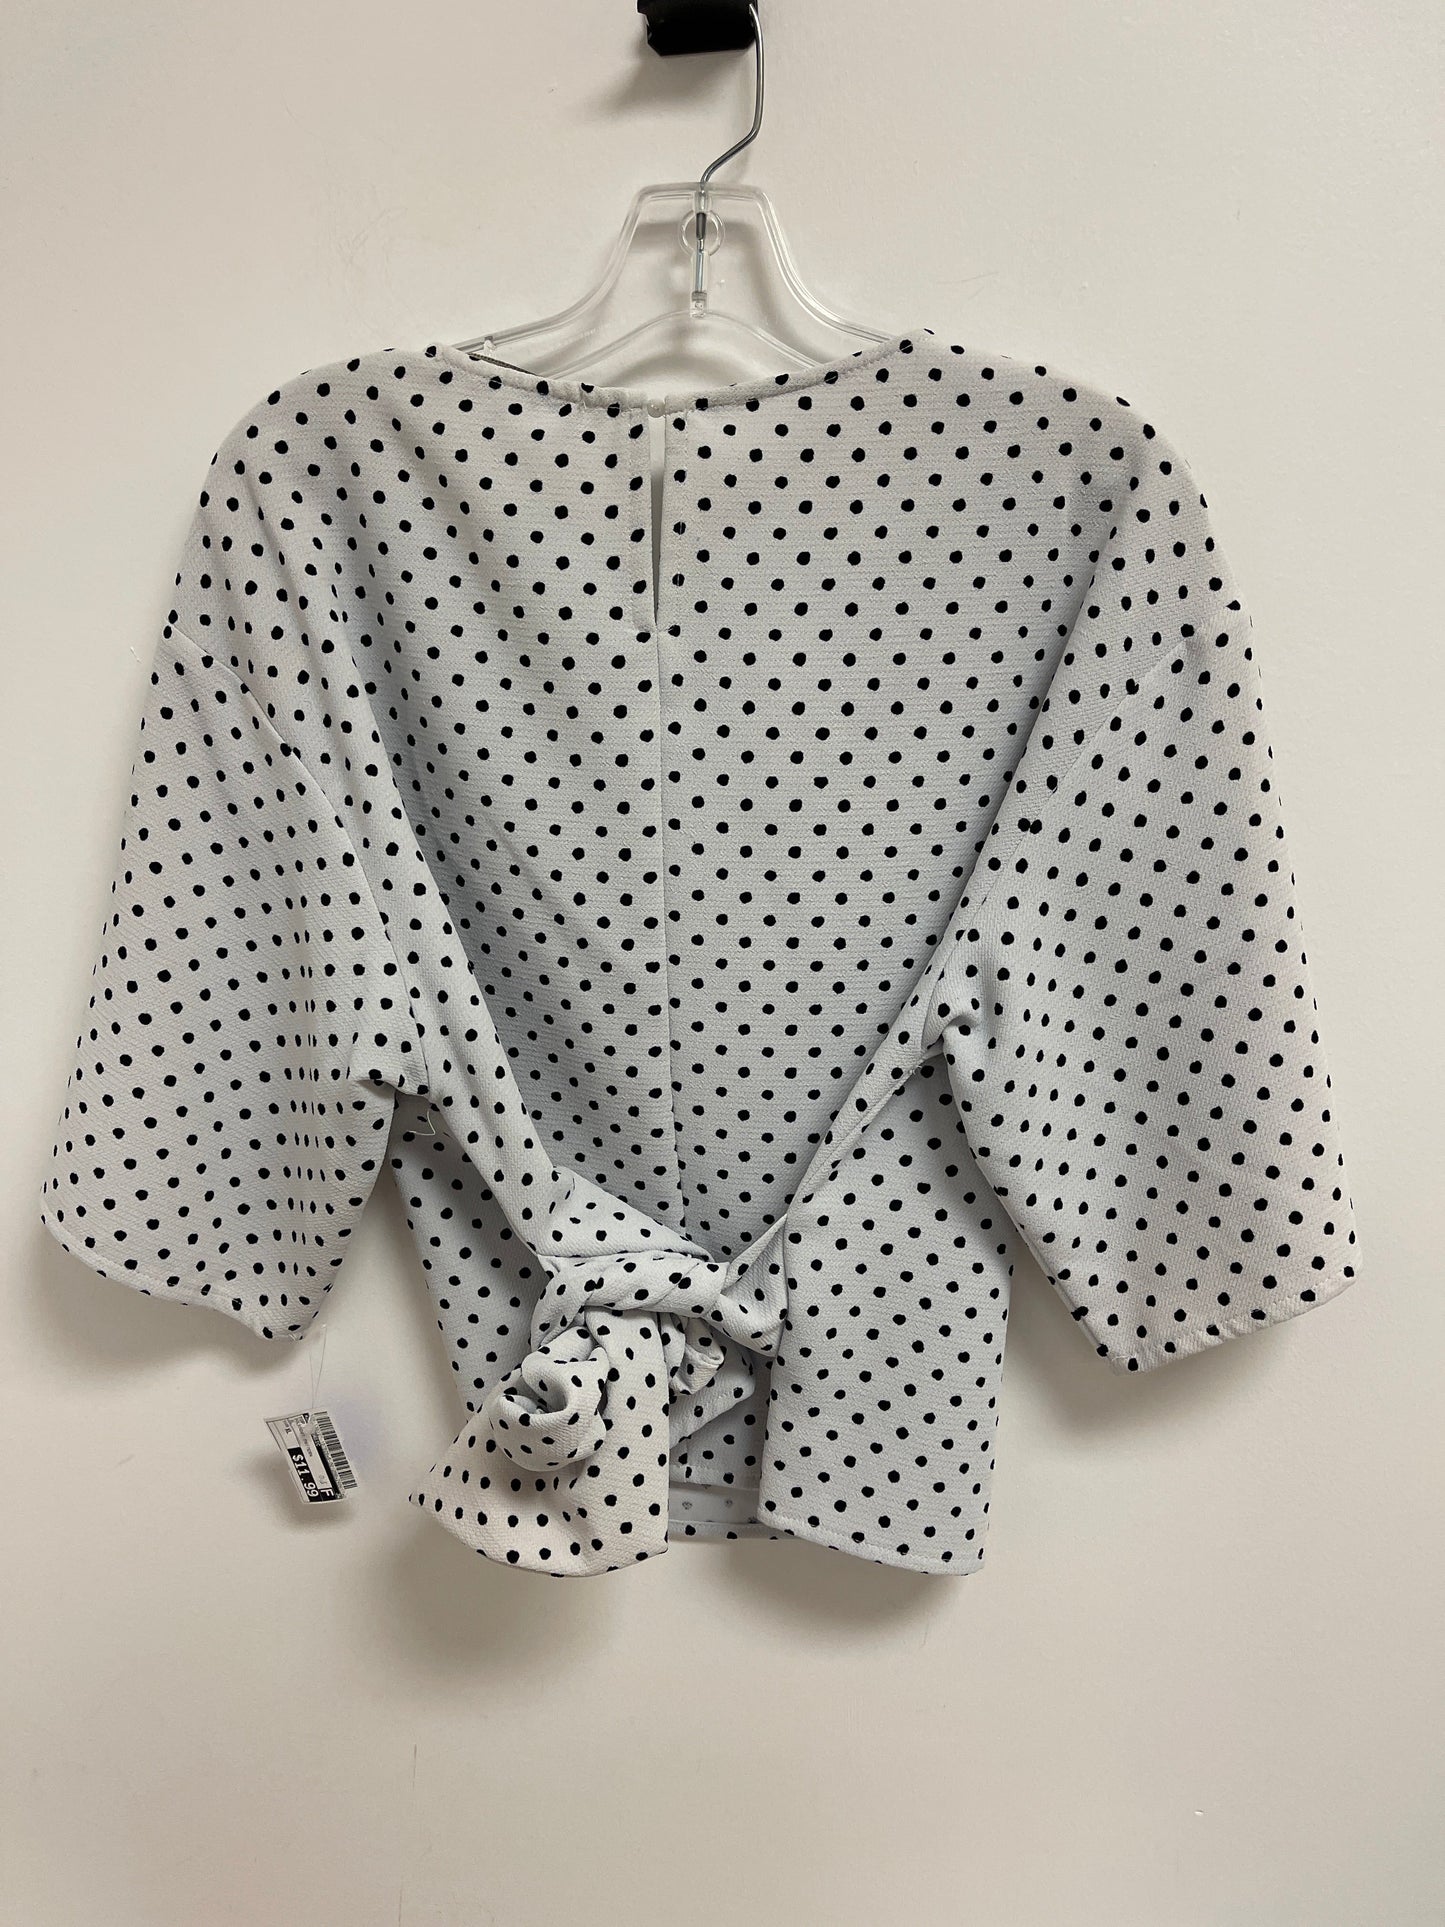 Polkadot Pattern Top Short Sleeve Zara Basic, Size Xl